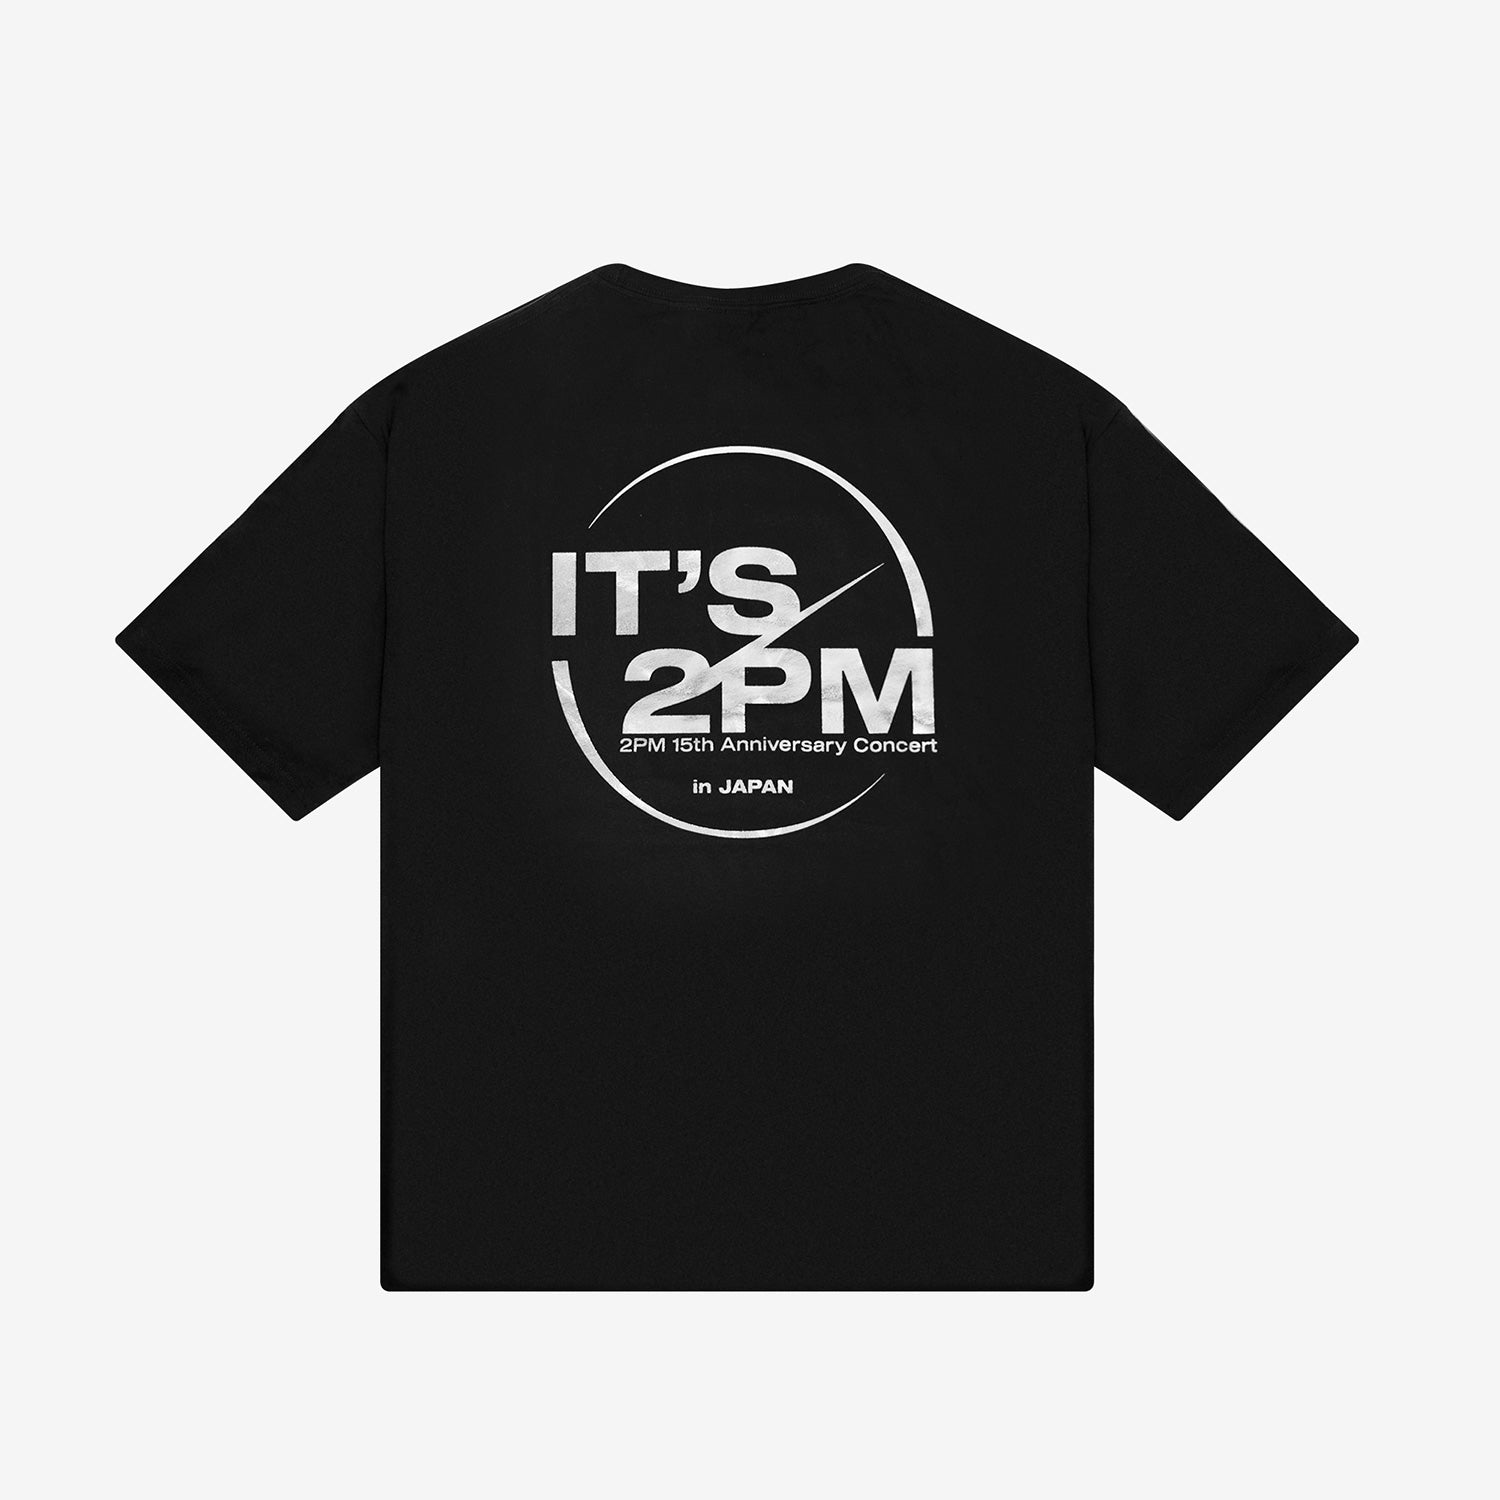 IT'S 2PM Tシャツ Mサイズ